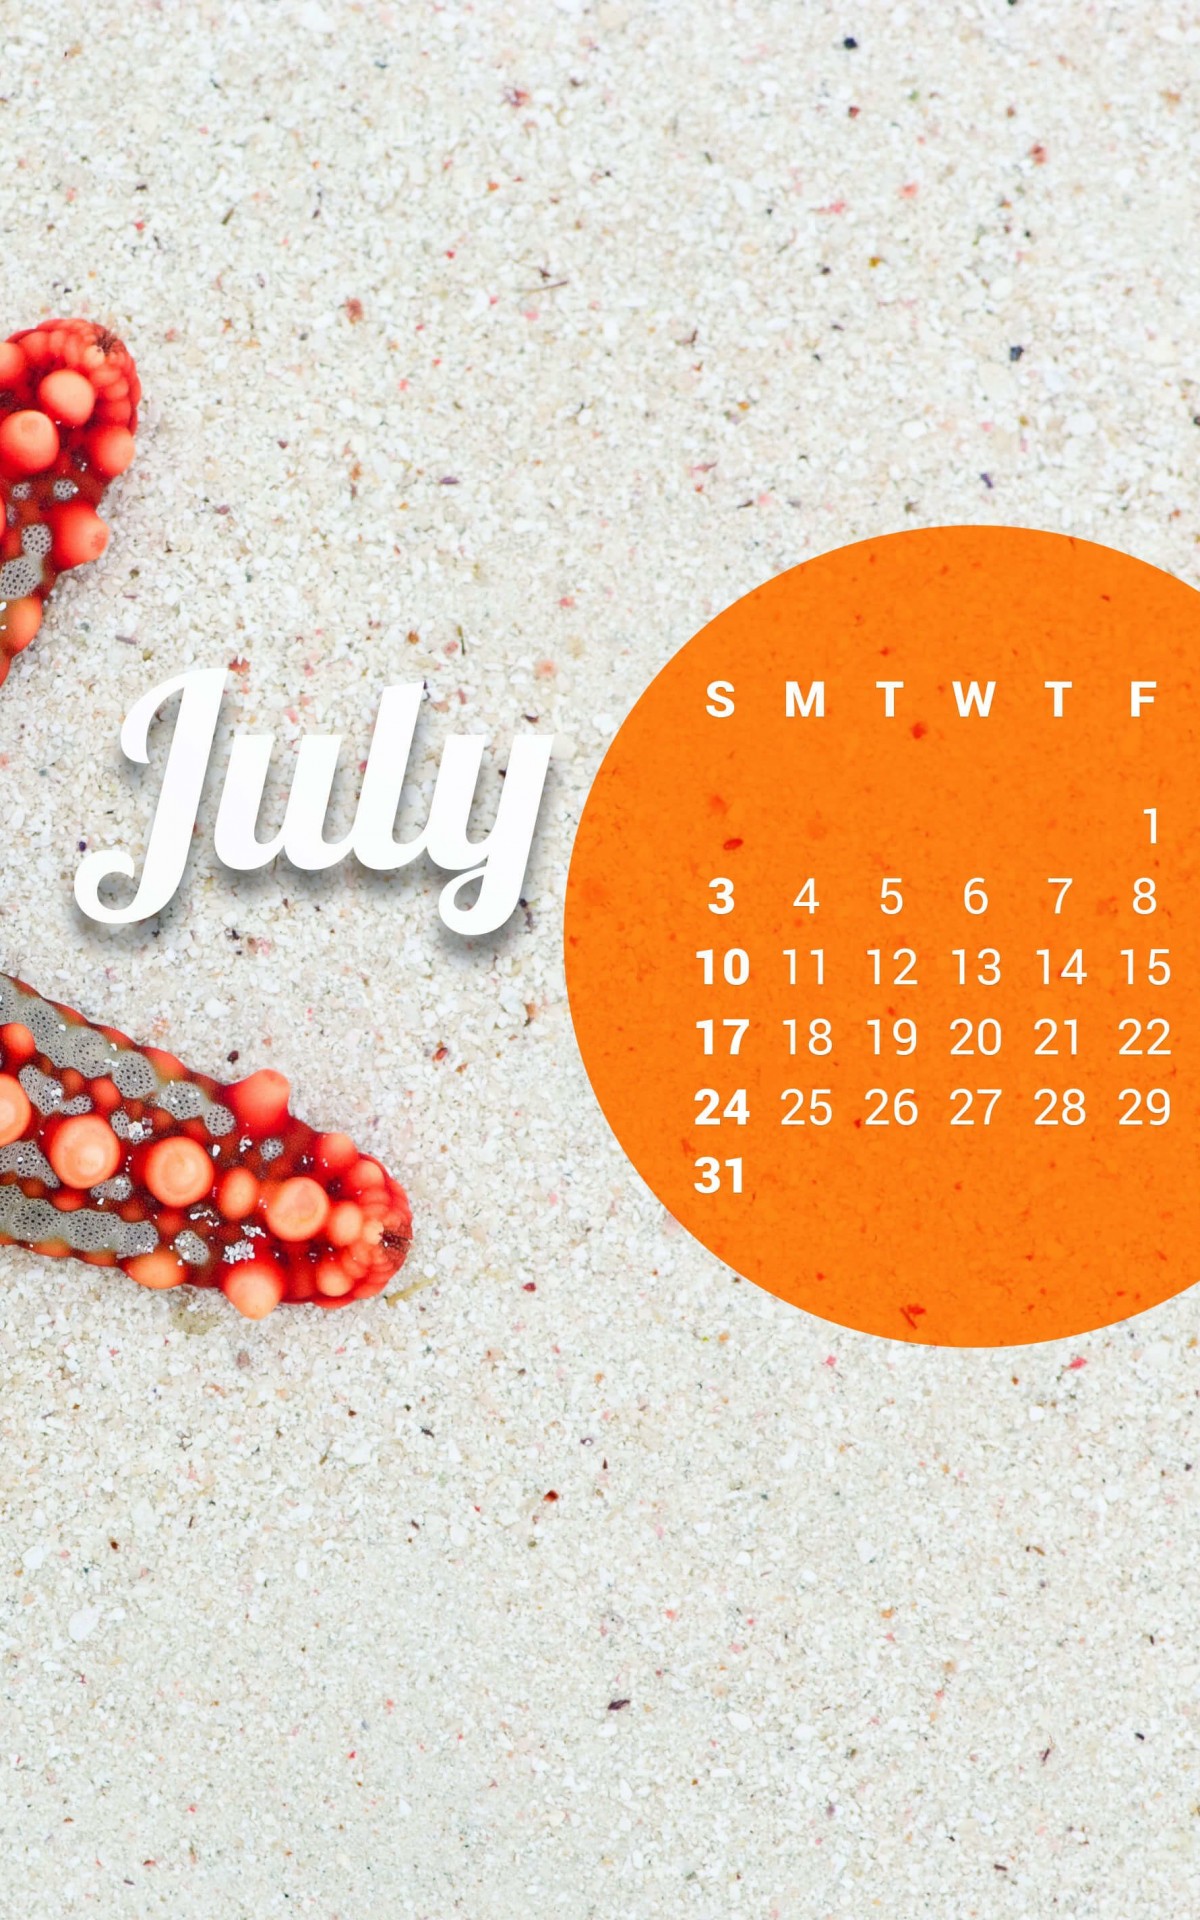 July 2016 Calendar Wallpaper for Amazon Kindle Fire HDX